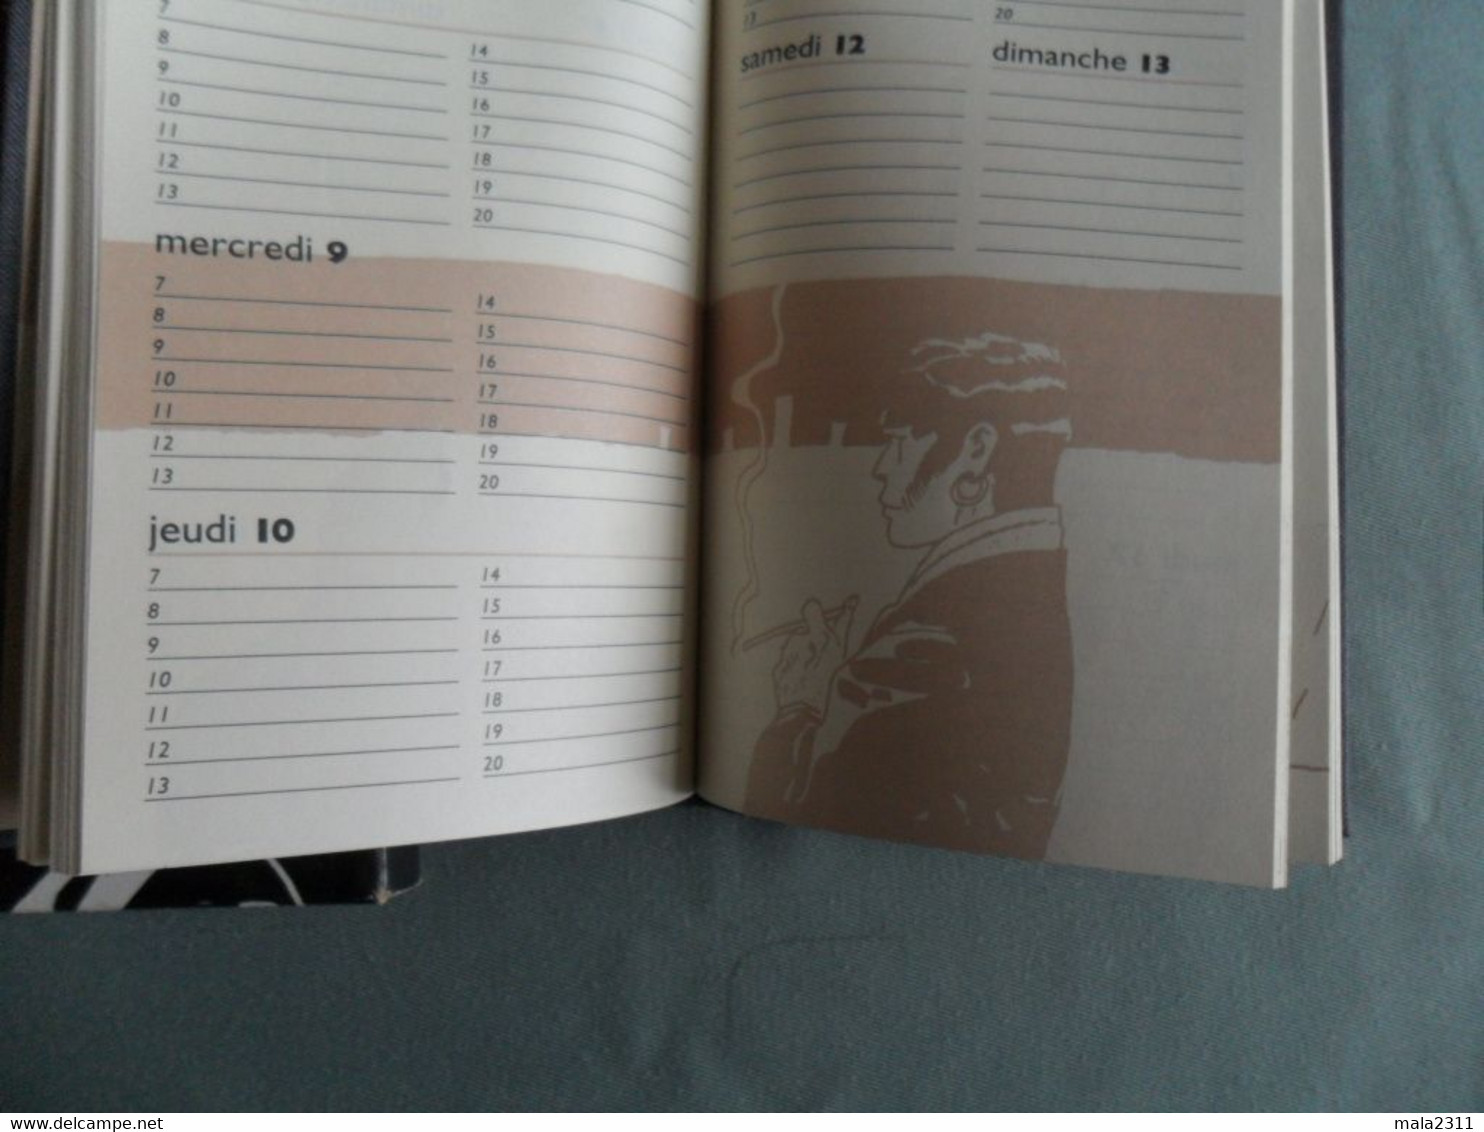 CORTO MALTESE - HUGO PRATT  /  Agenda 1992 Couverture Cartonnée / Dimension 9,5X16,5 Cm. / CASTERMAN - Agende & Calendari